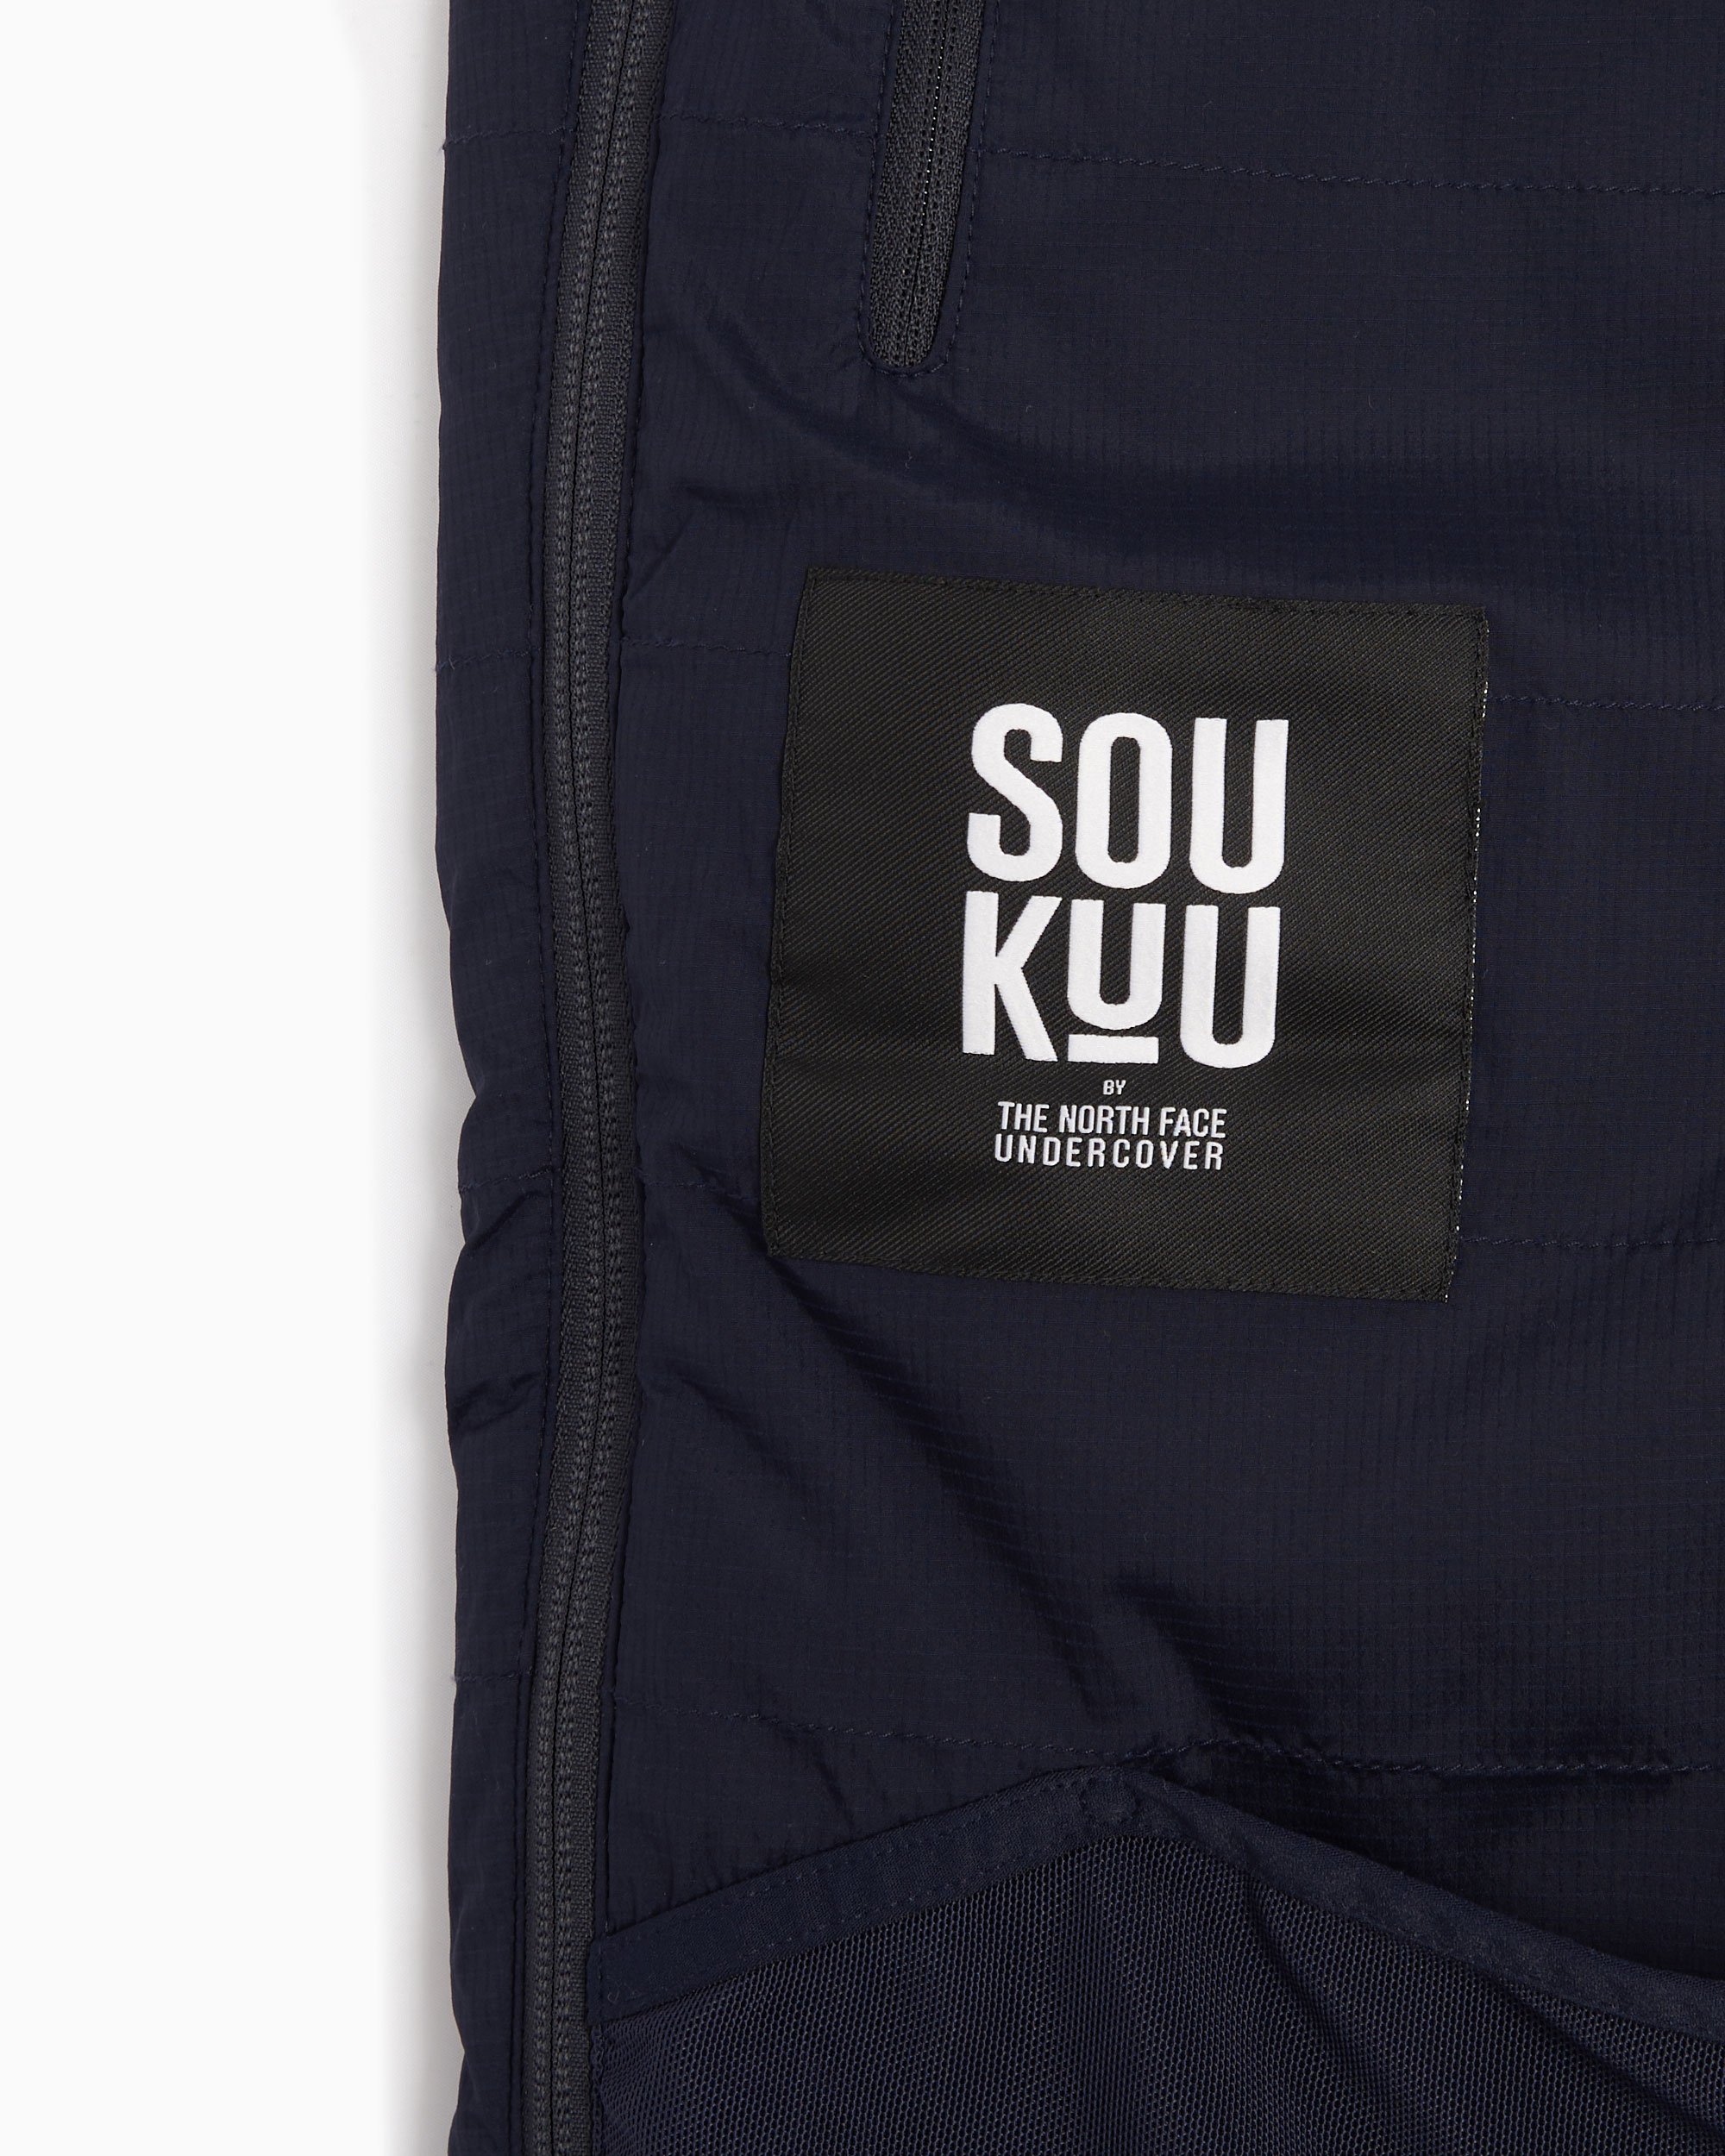 The North Face x Undercover Soukuu 50/50 Men's Pants Blue 